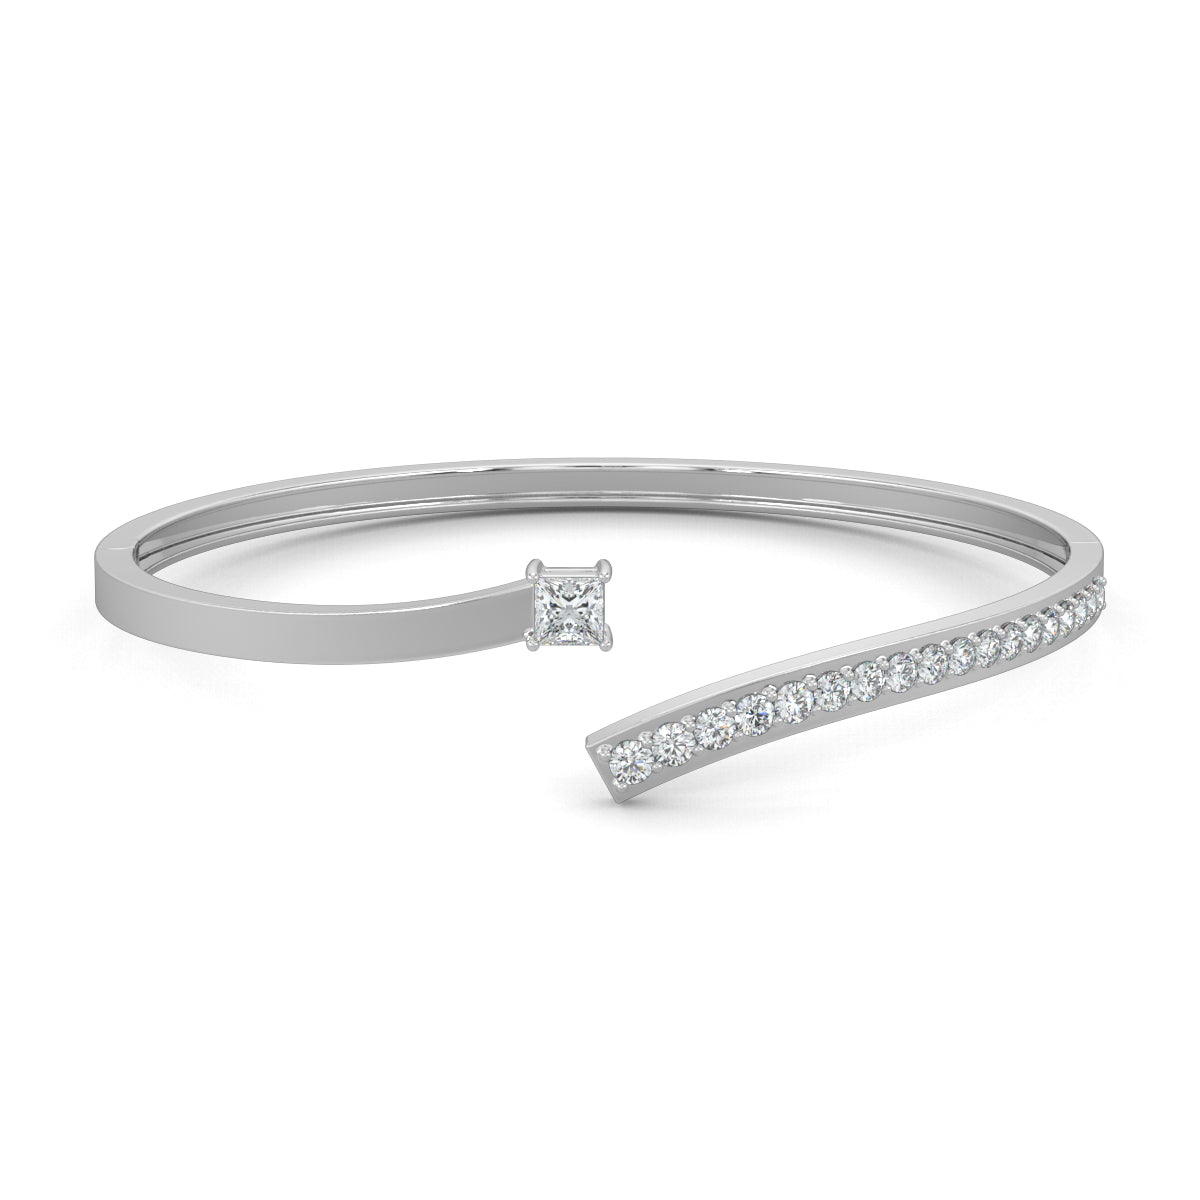 White Gold, Diamond Bracelet, Natural diamond bracelet, Lab-grown diamond bracelet, JewelCurve Diamond Bracelet, oval bracelet, princess-cut diamond, round diamonds, elegant jewelry, luxury bracelet, open band design, statement accessory